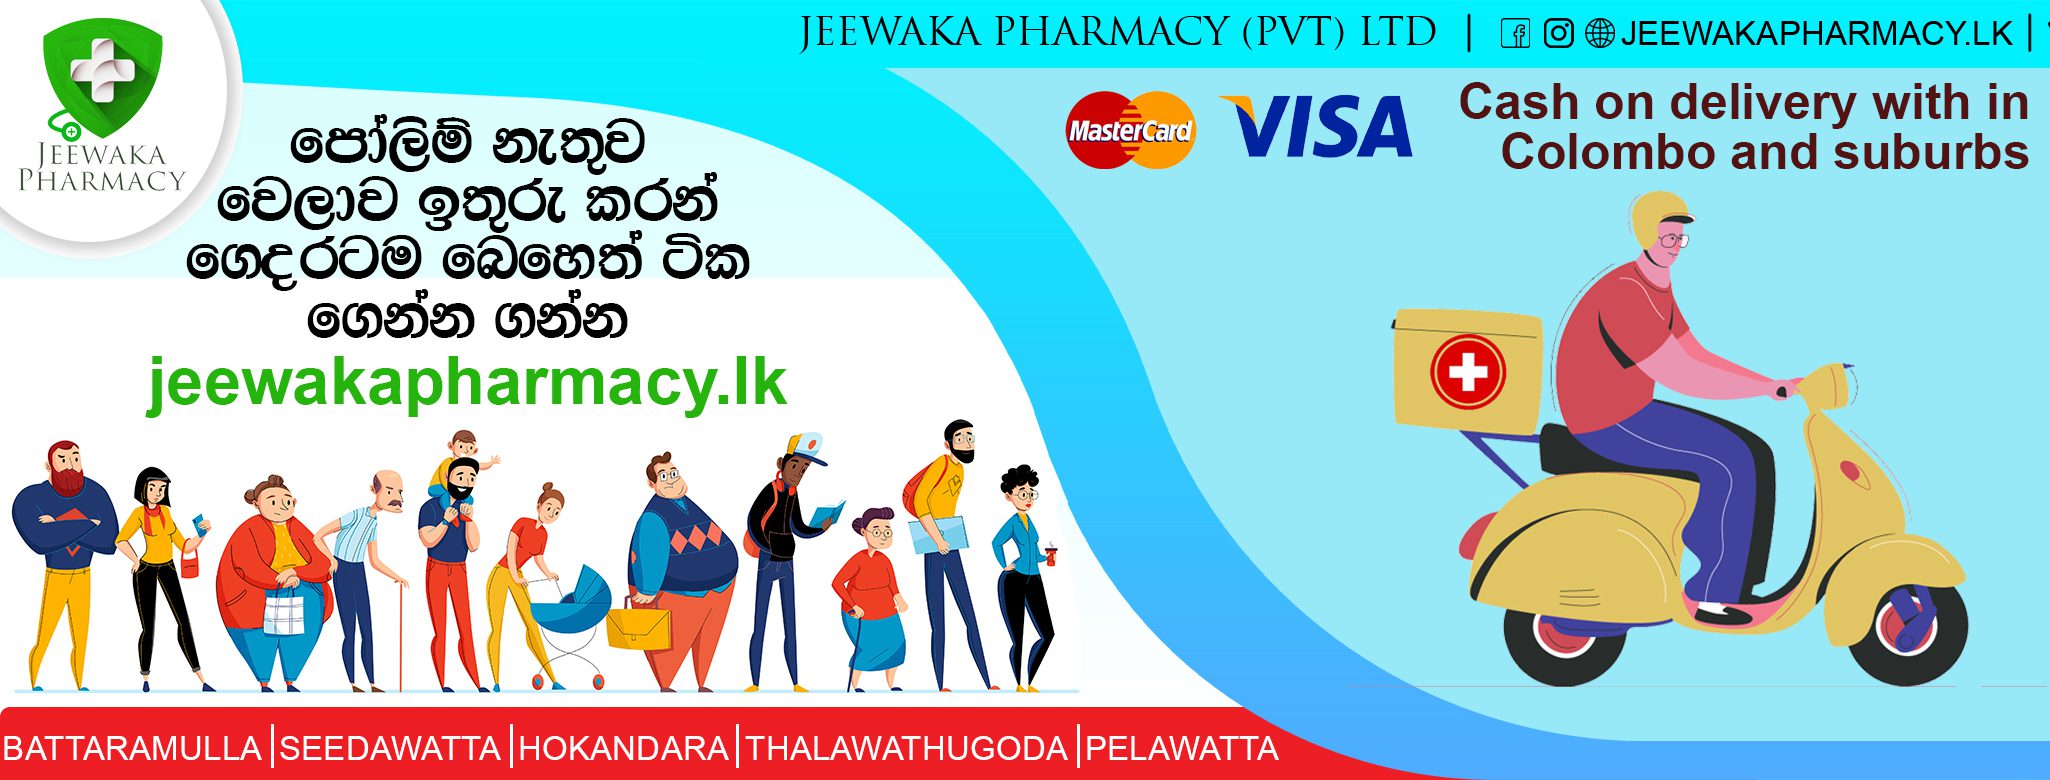 Best Place to Buy Medicine  Cosmetics in Sri Lanka - Jeewaka Pharmacy  (PVT) Ltd